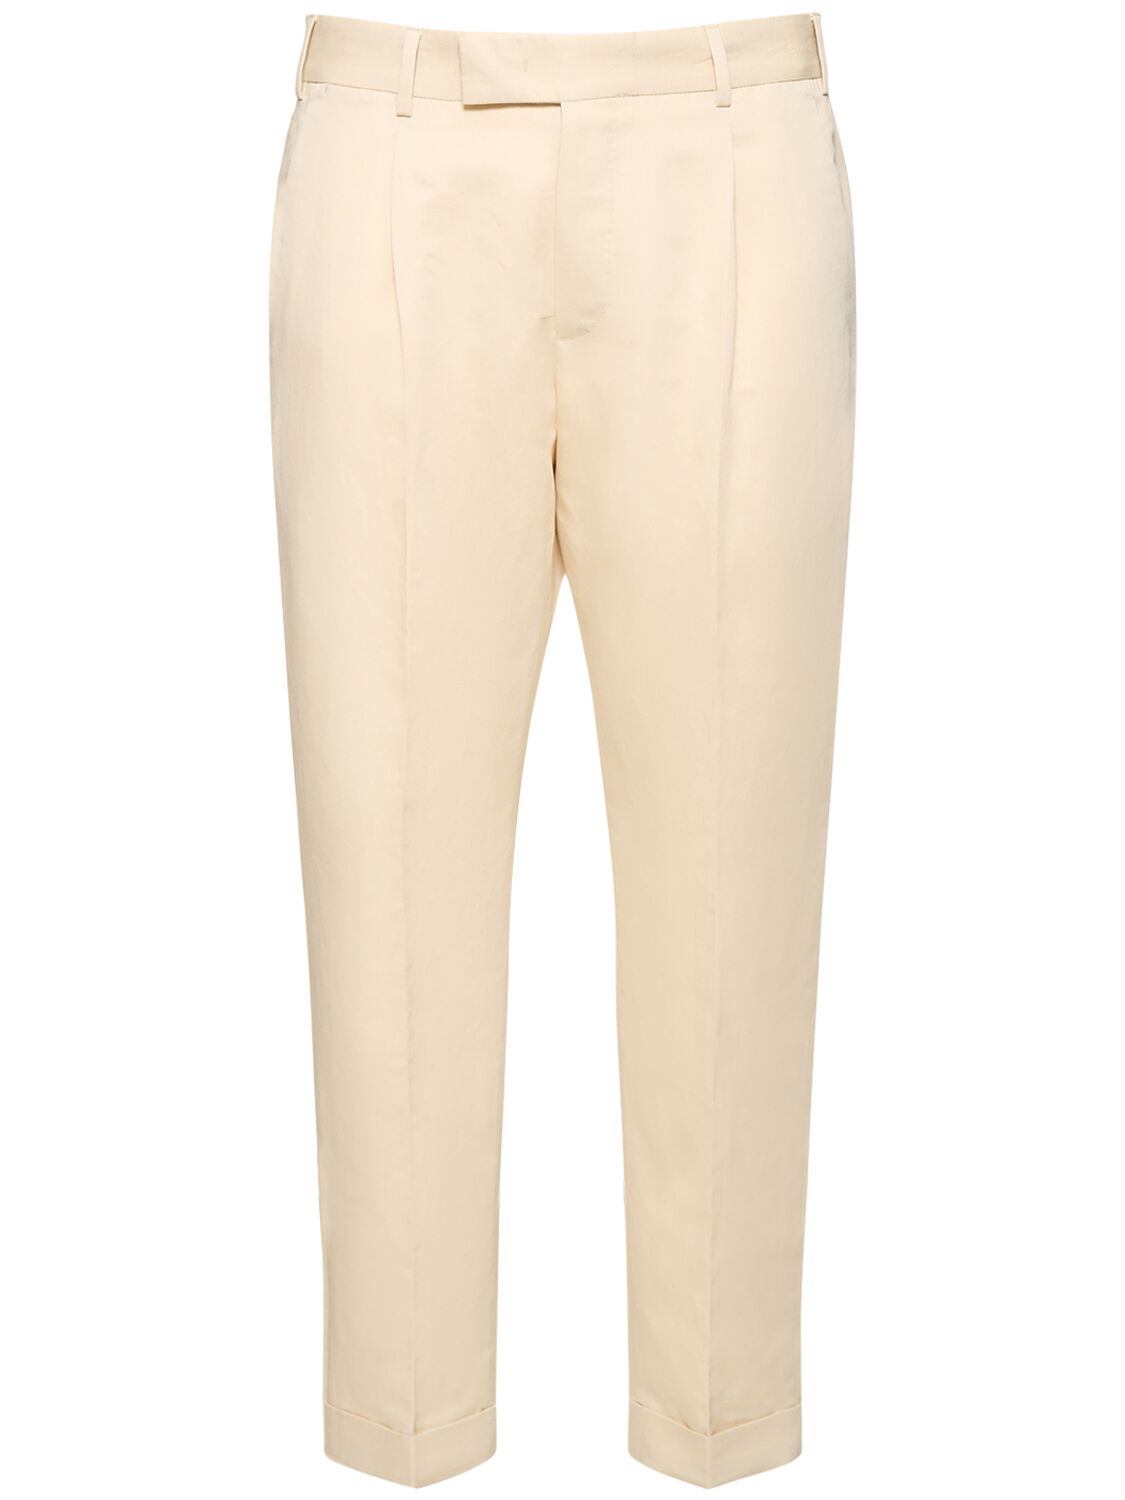 Shop Pt Torino Rebel Cotton & Linen Pants In Panna